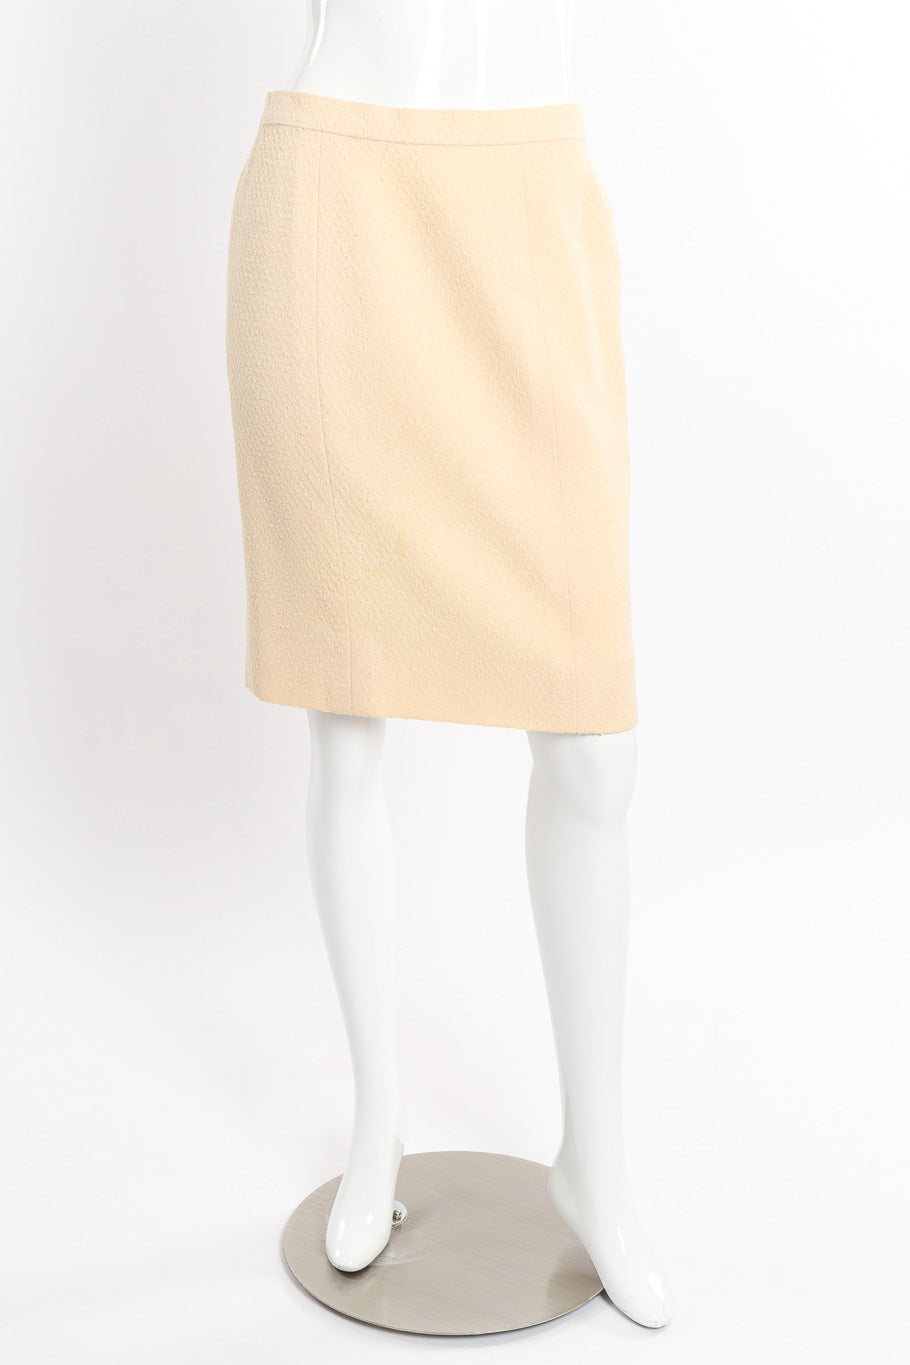 Chanel Knit Bouclé Jacket and Skirt Set skirt front on mannequin @recessla